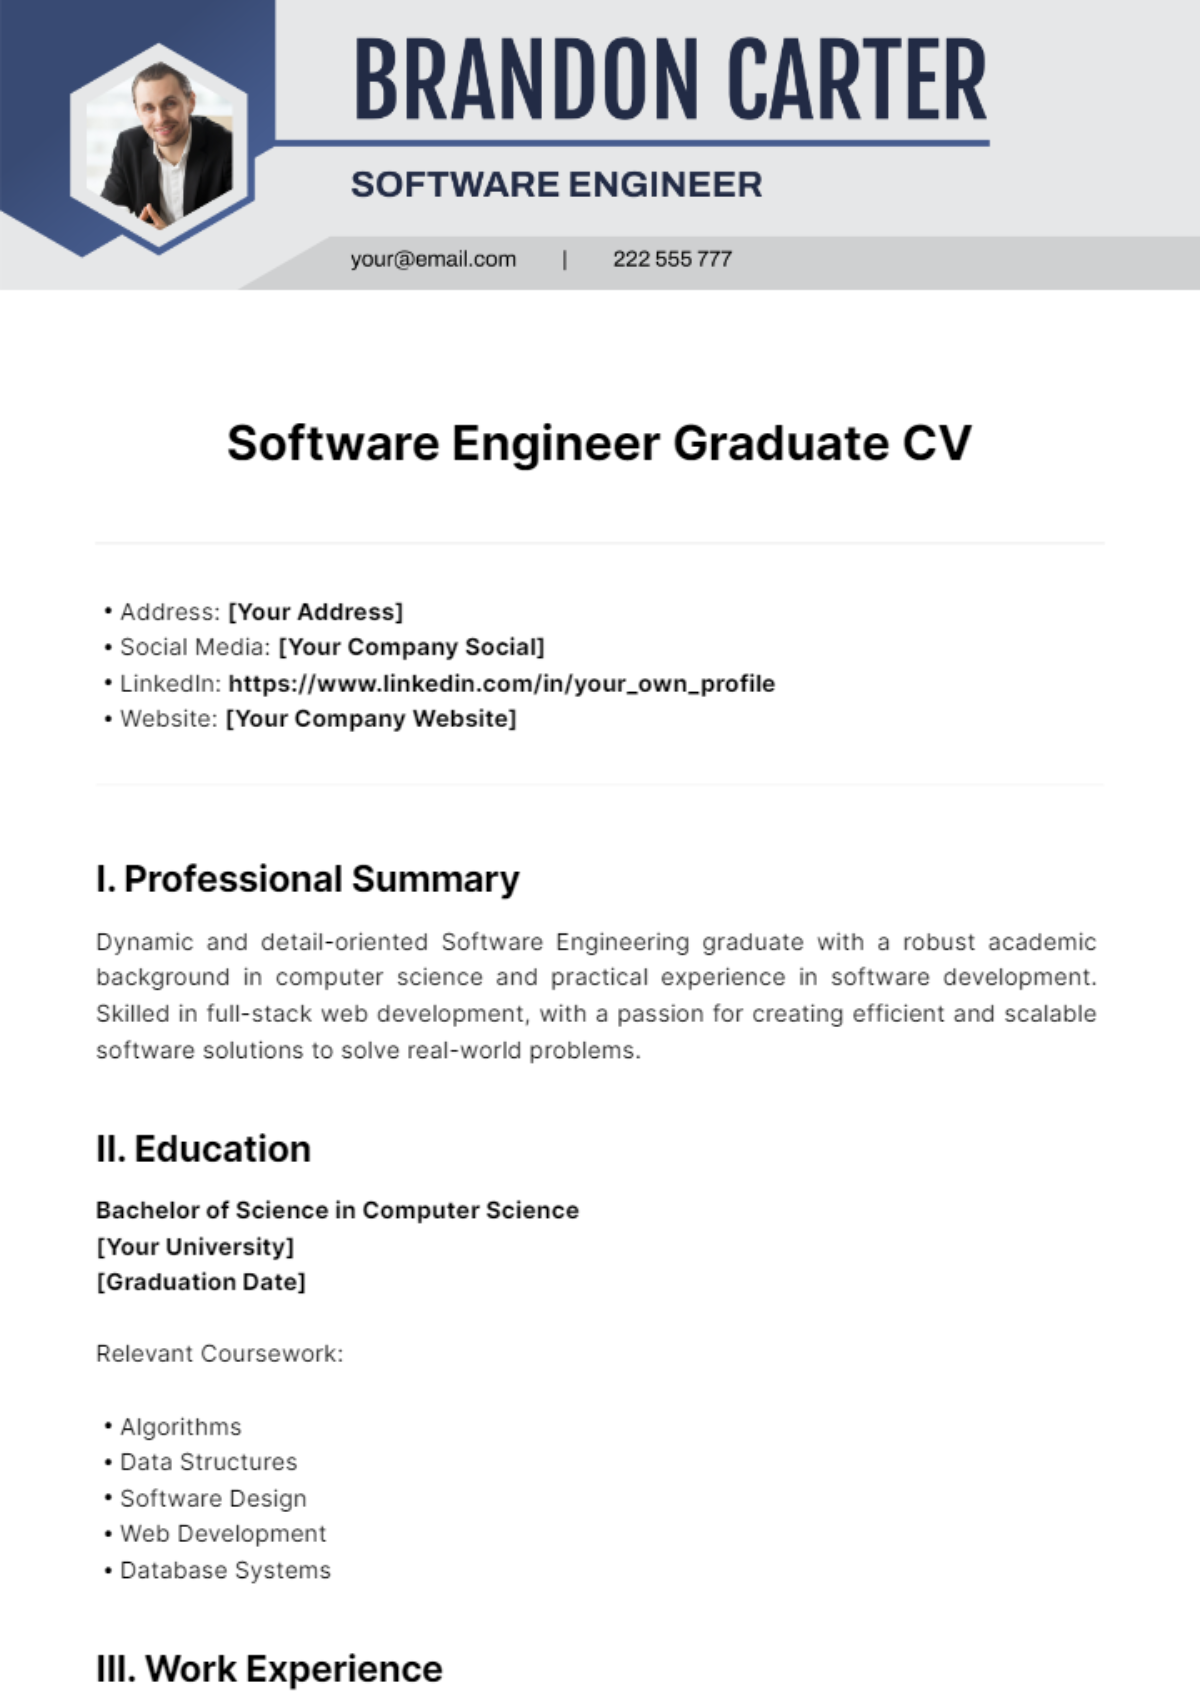 Software Engineer Graduate CV Template